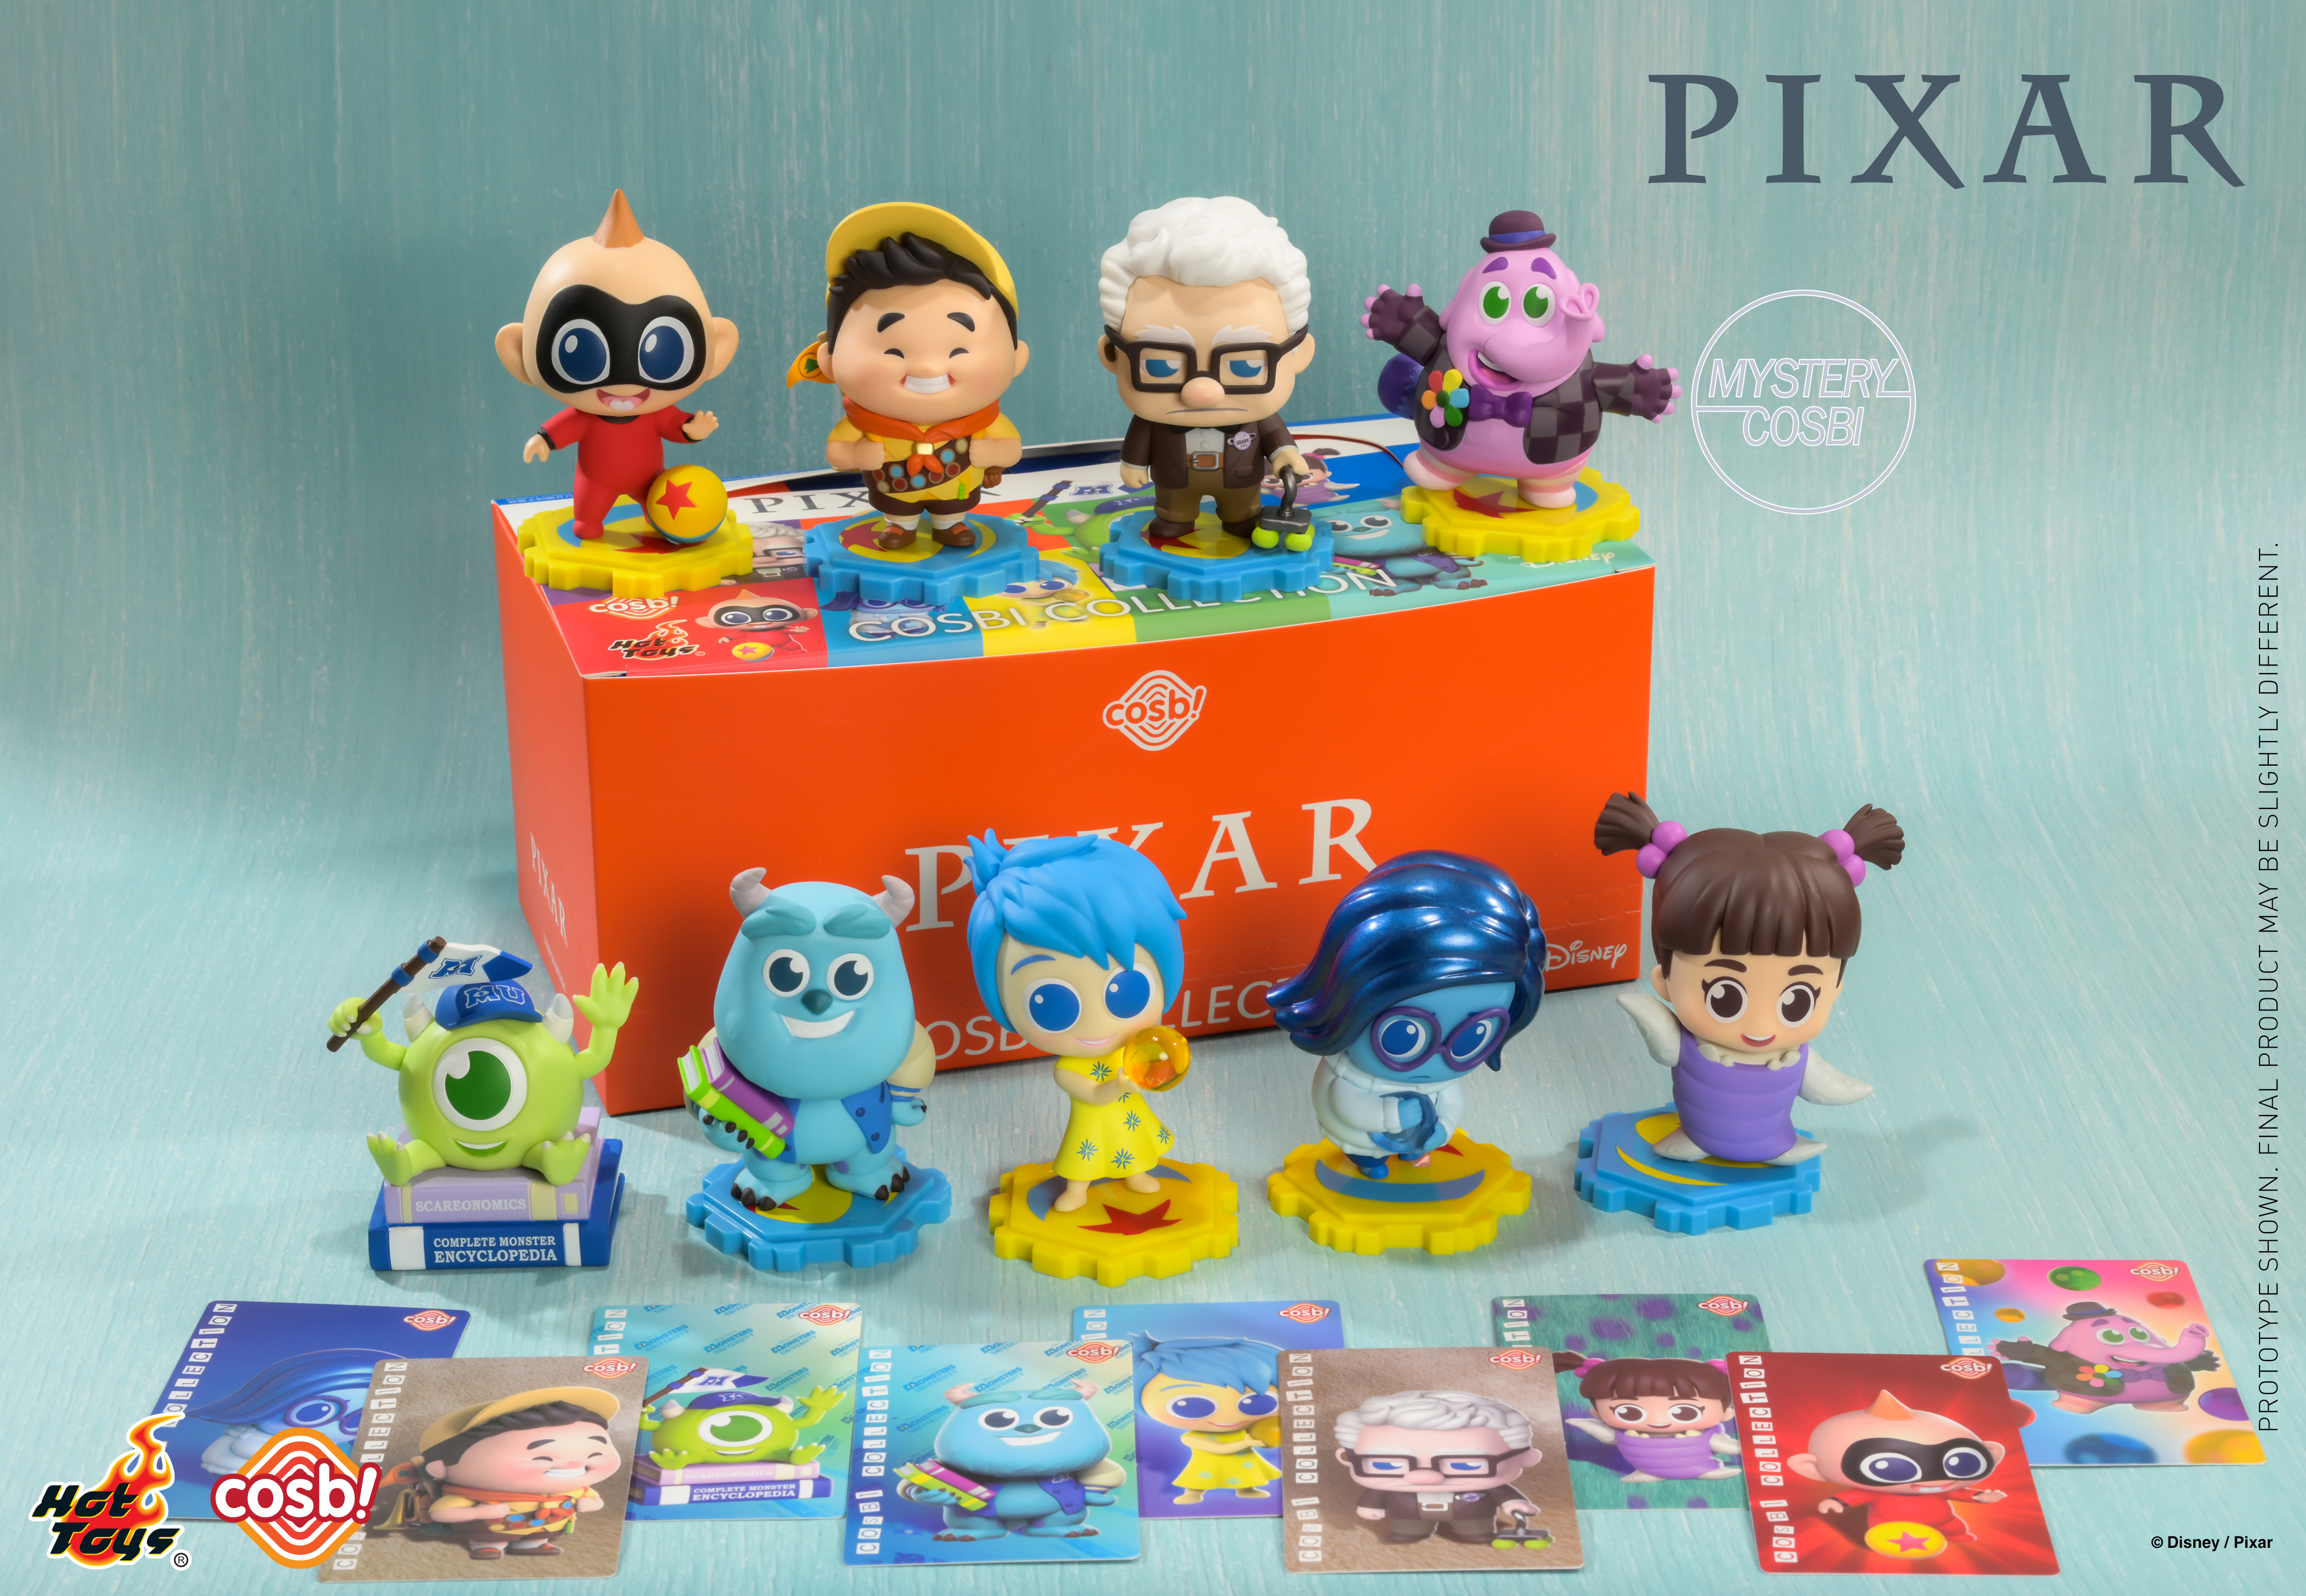 Hot Toys - Pixar Cosbi_PR1